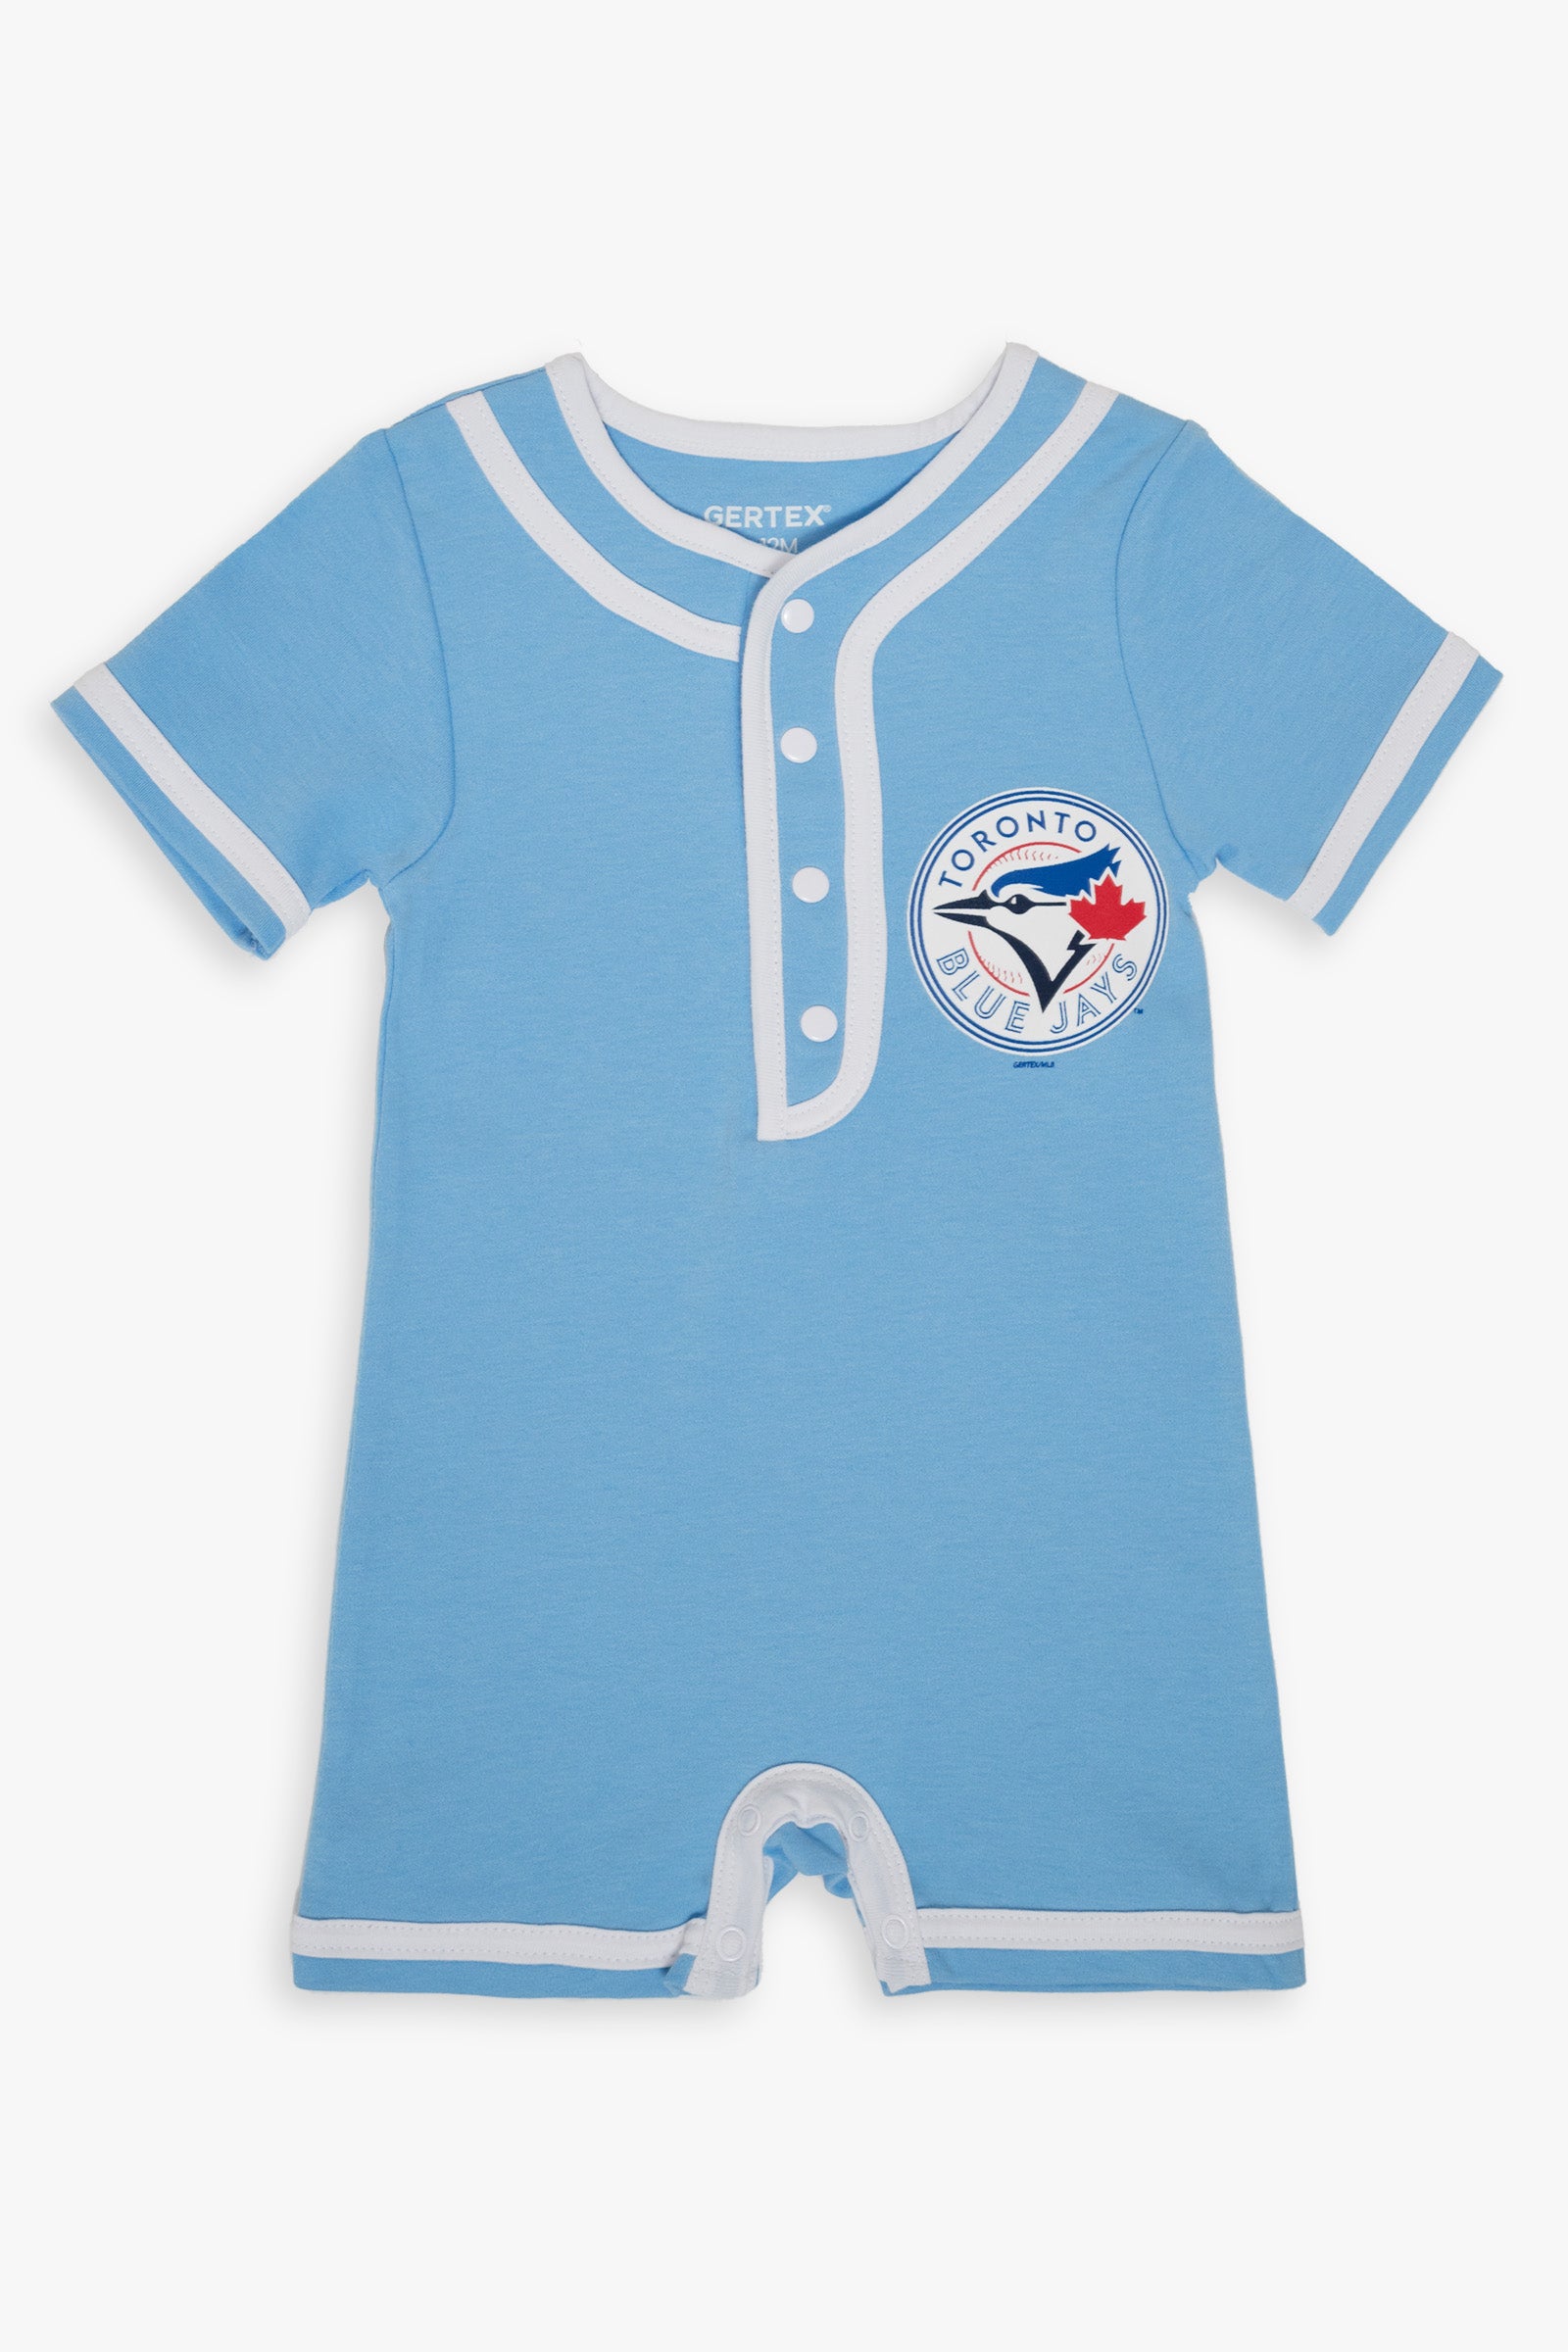 Toronto Blue Jays Gear, Blue Jays Jerseys, Store, Toronto Pro Shop, Apparel